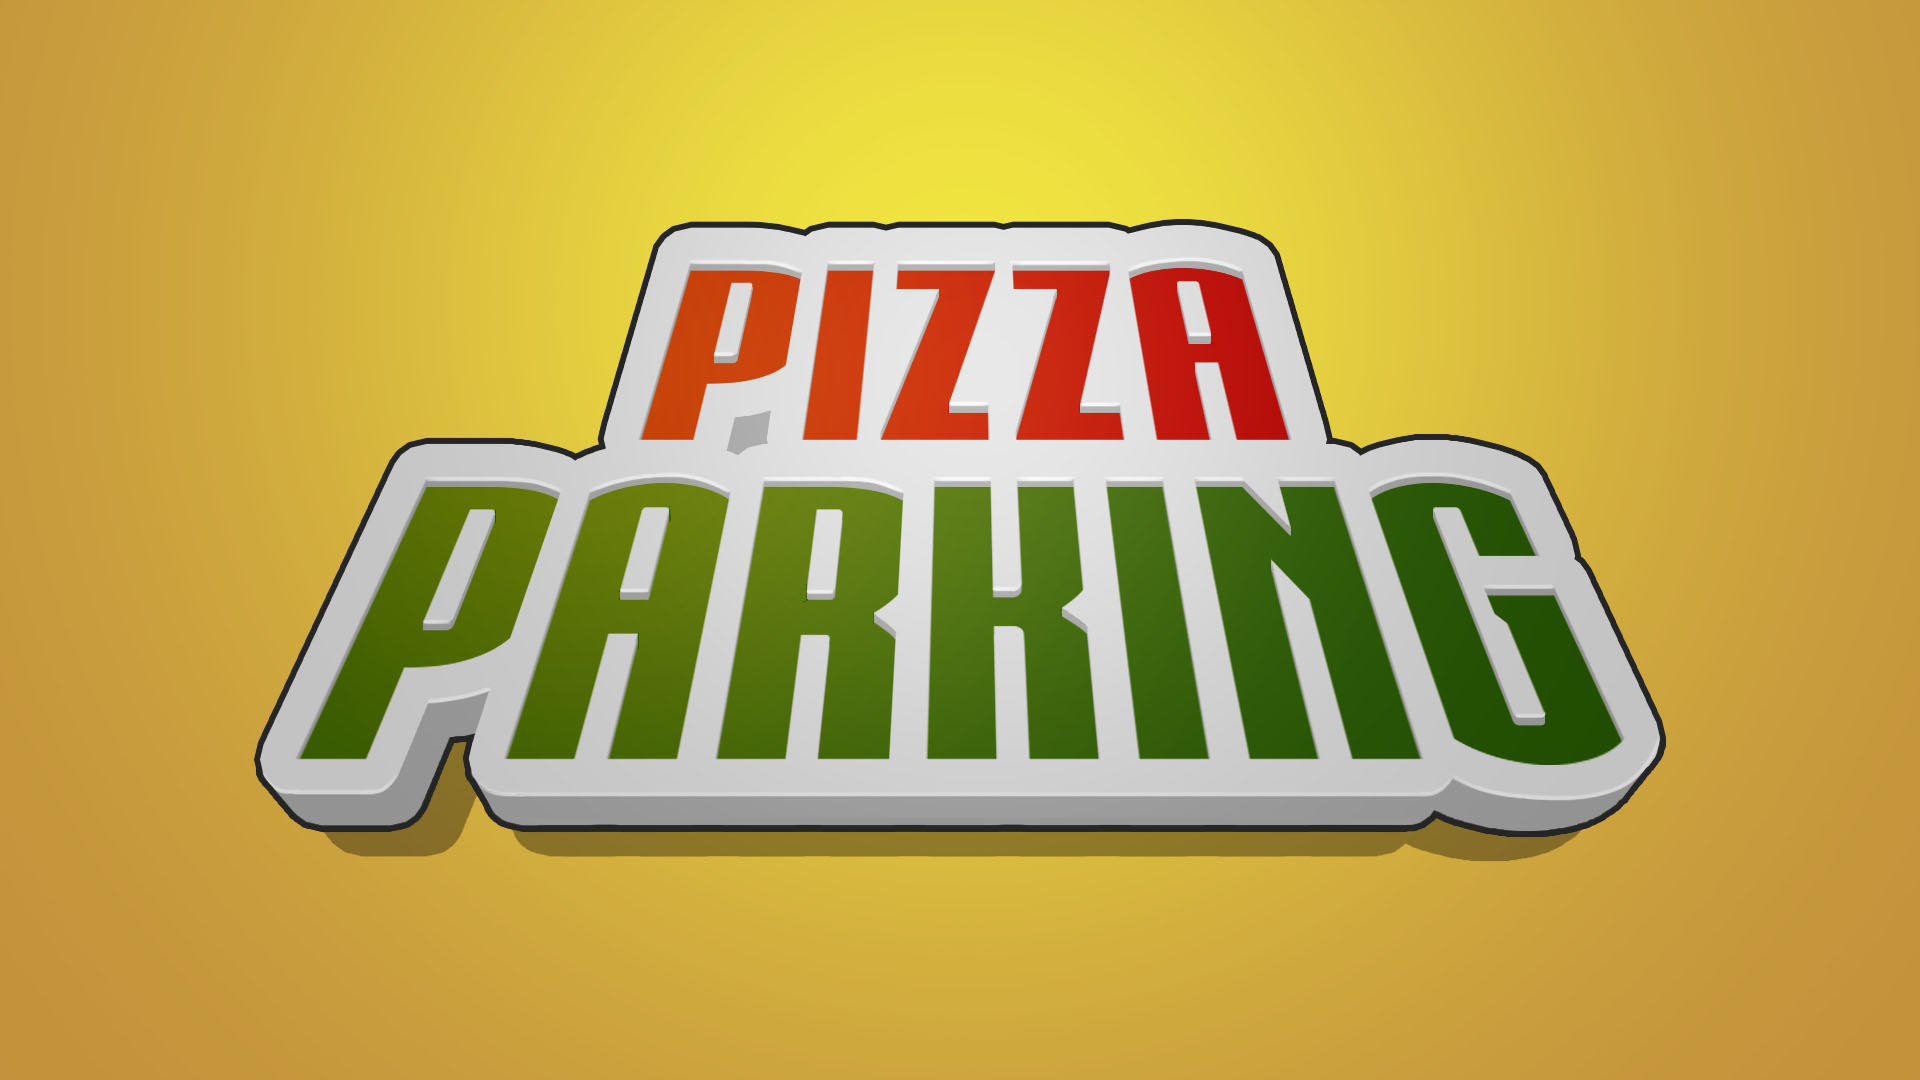 Pizza Parking 1